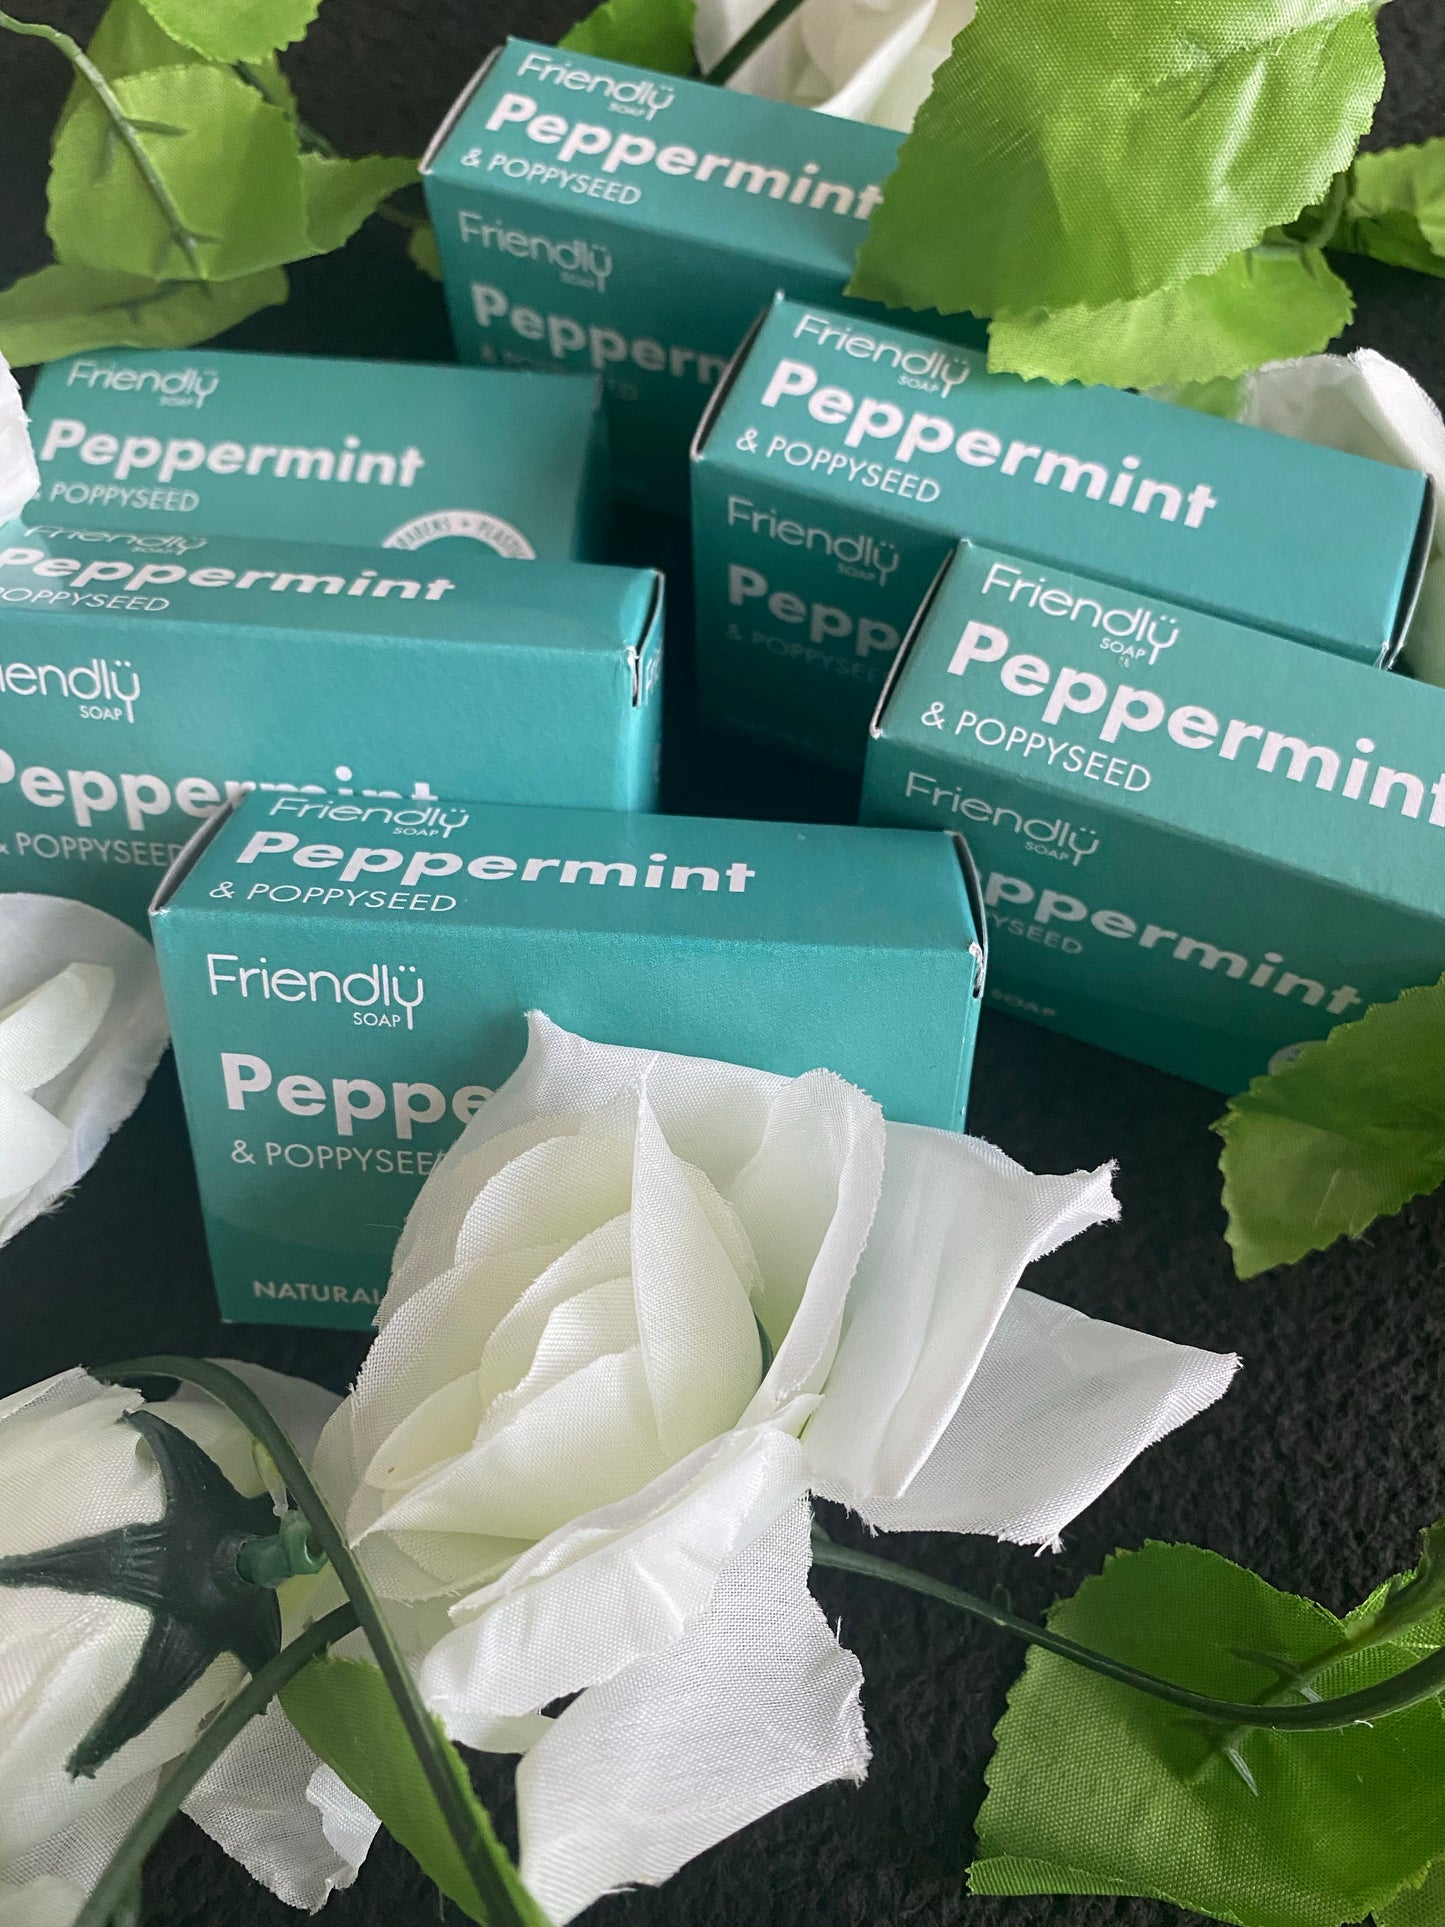 Peppermint & Poppy Seeds Soap - Handmade Natural Soap